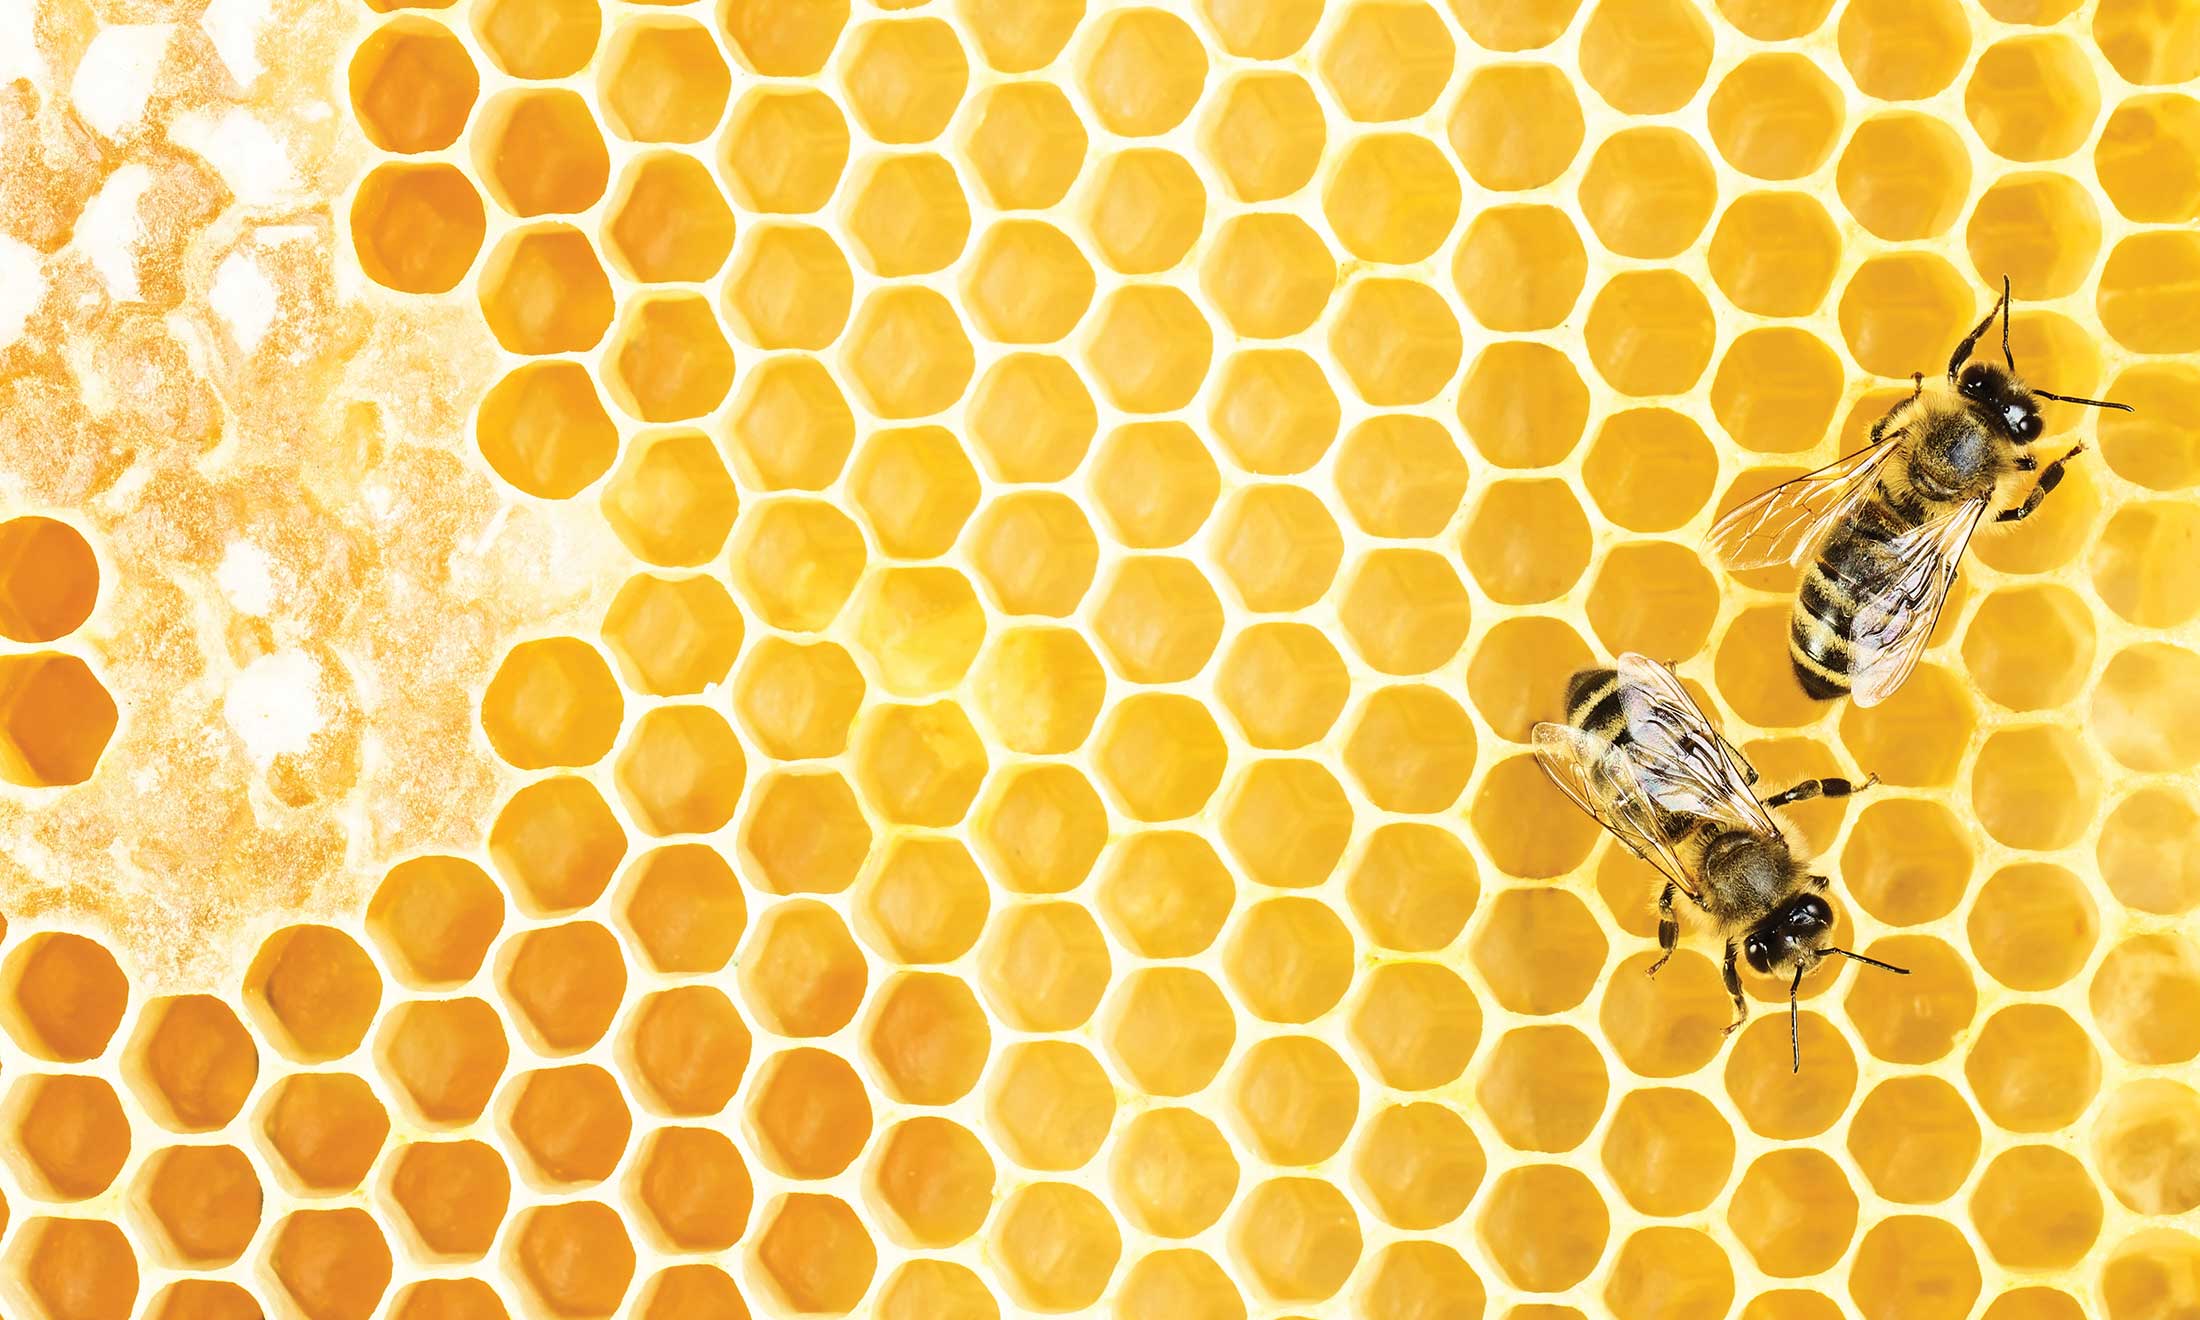 honeybee crawling on a yellow honeycomb